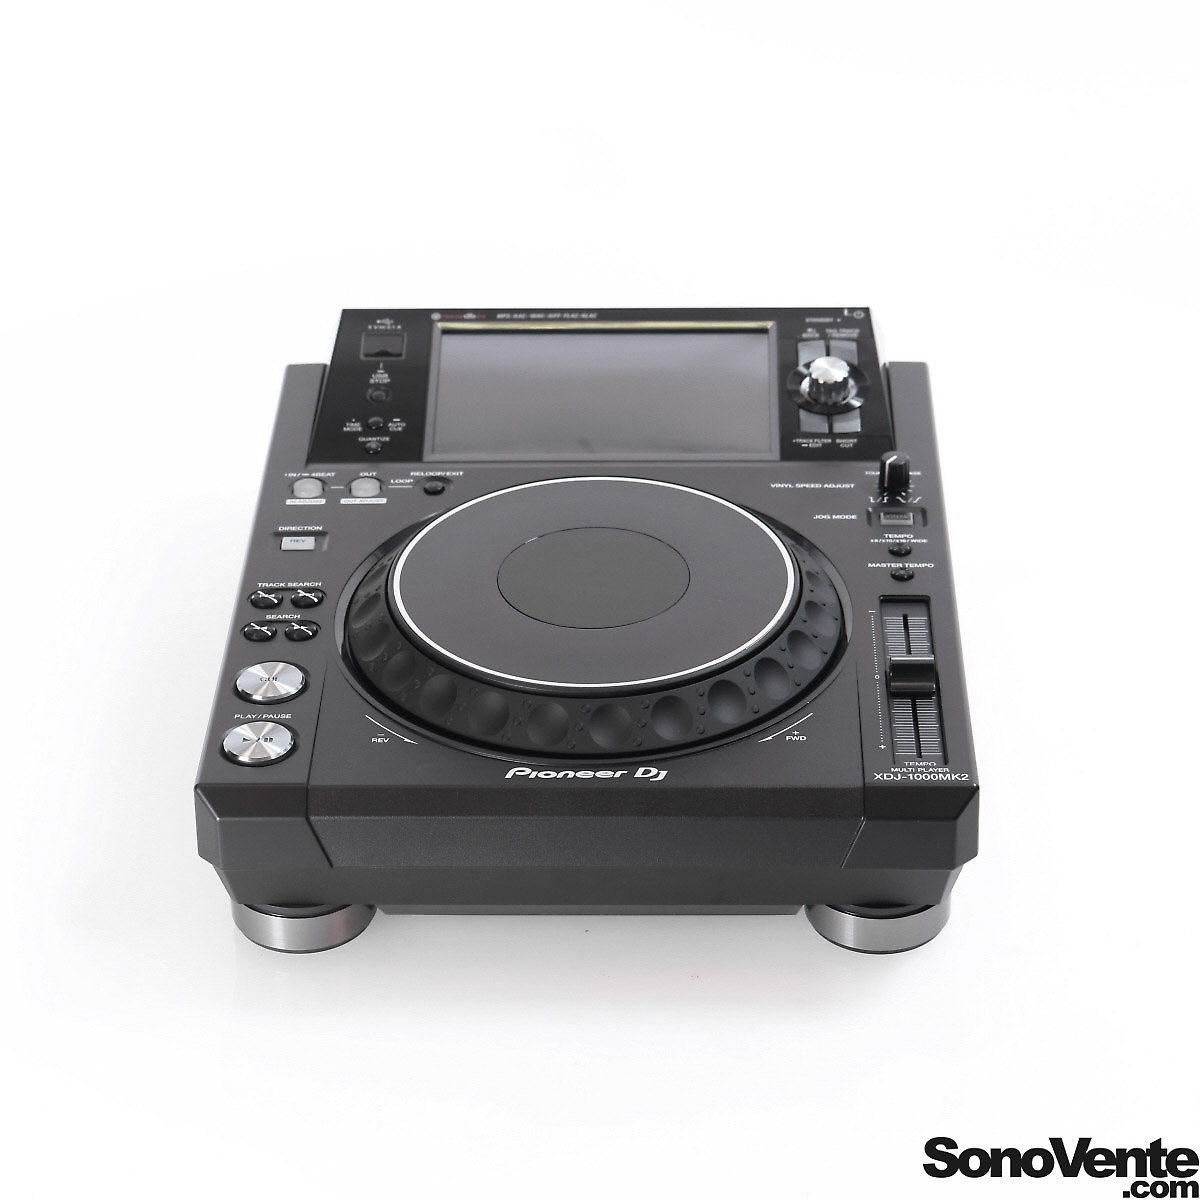 XDJ 1000 MK2 Pioneer DJ